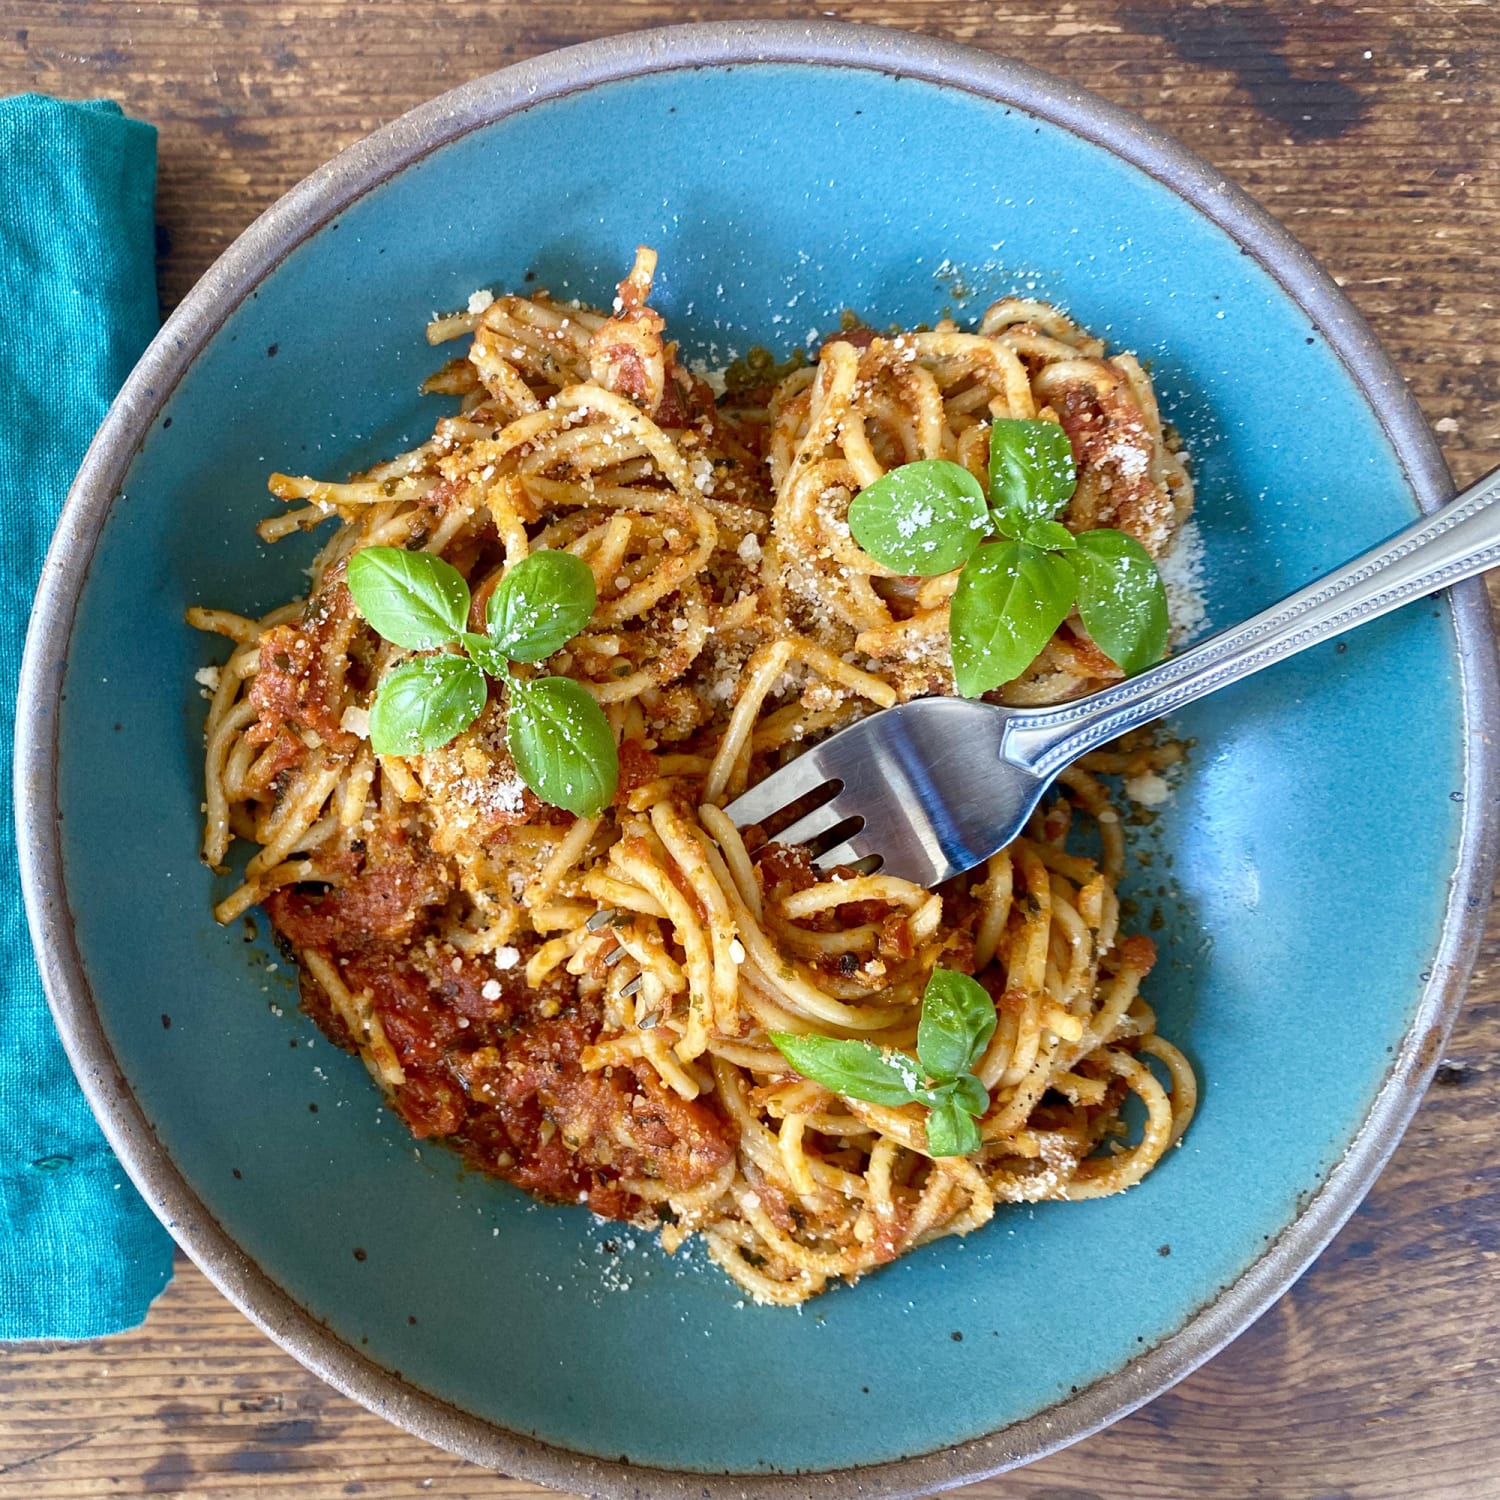 I Tried Mindy Kaling's 'The Bear'-inspired Spaghetti Recipe